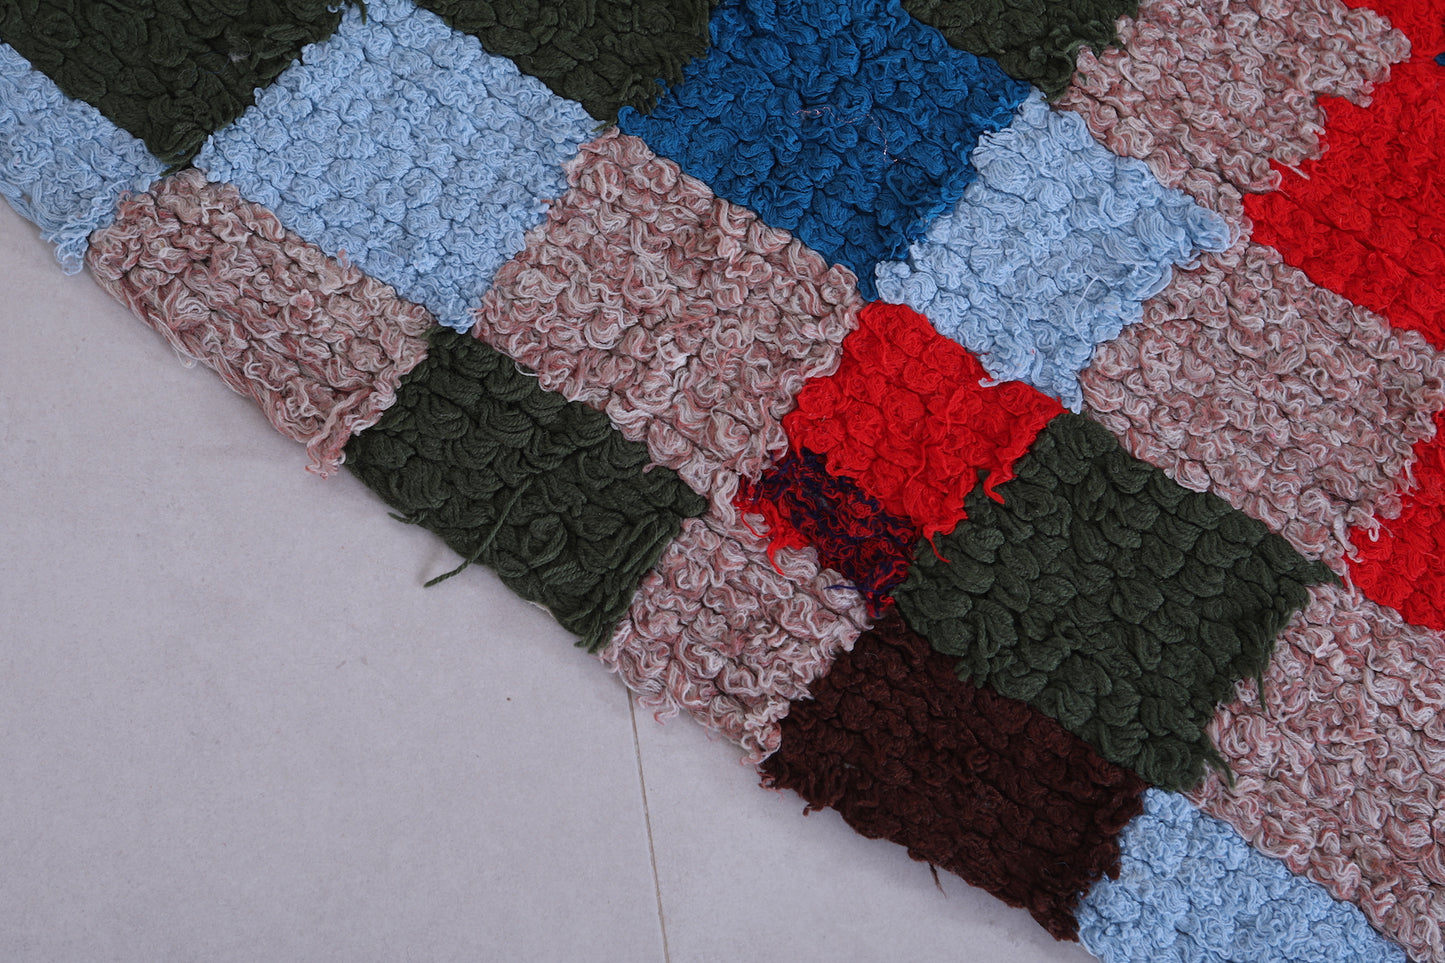 Checkered Colorful rug 3.1 X 4.4 Feet